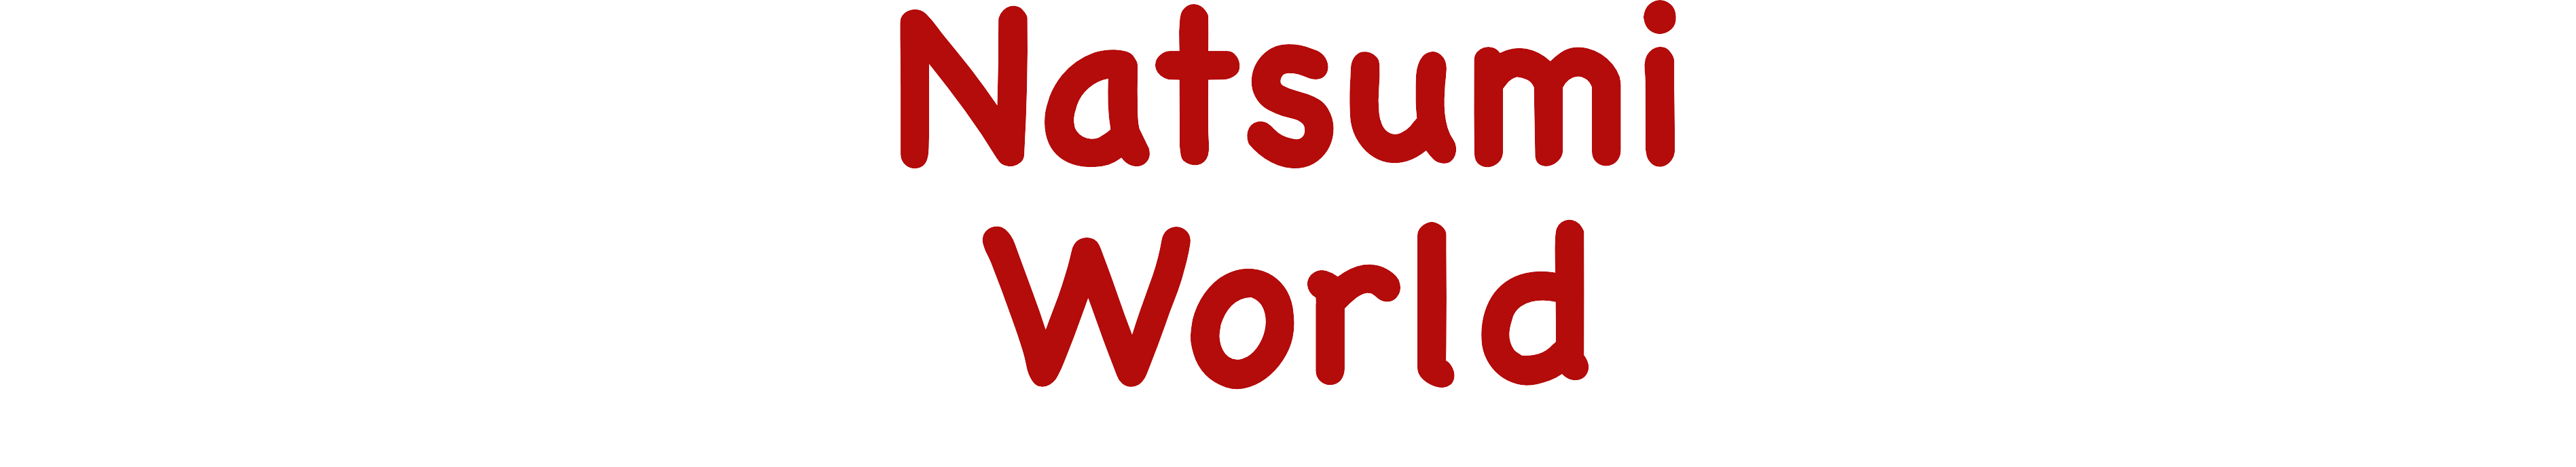 Natsumi World